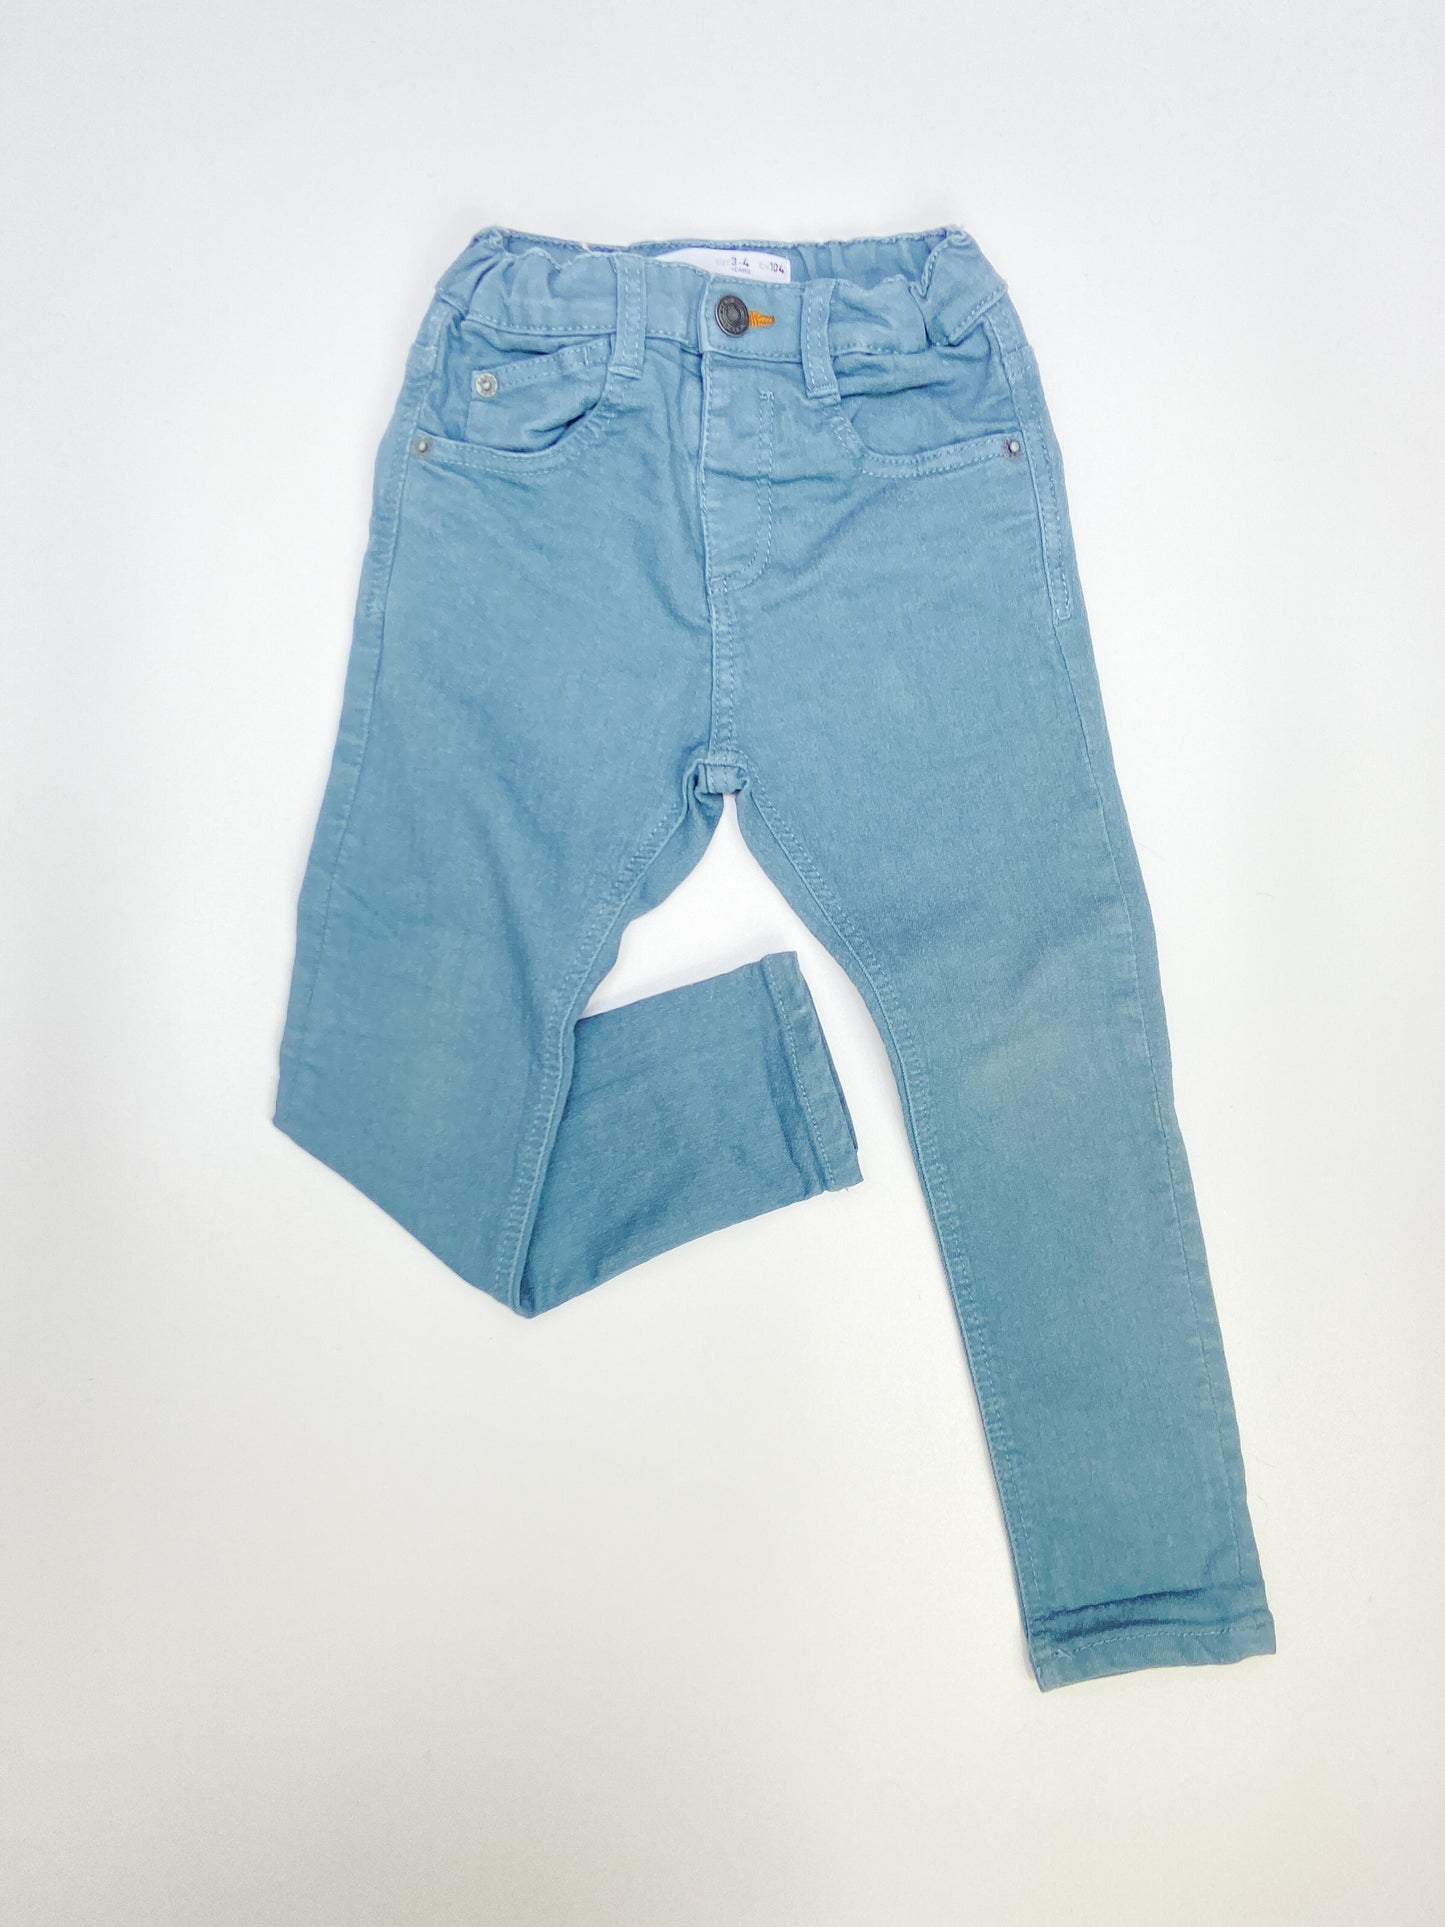 3-4 Y Light blue jeans